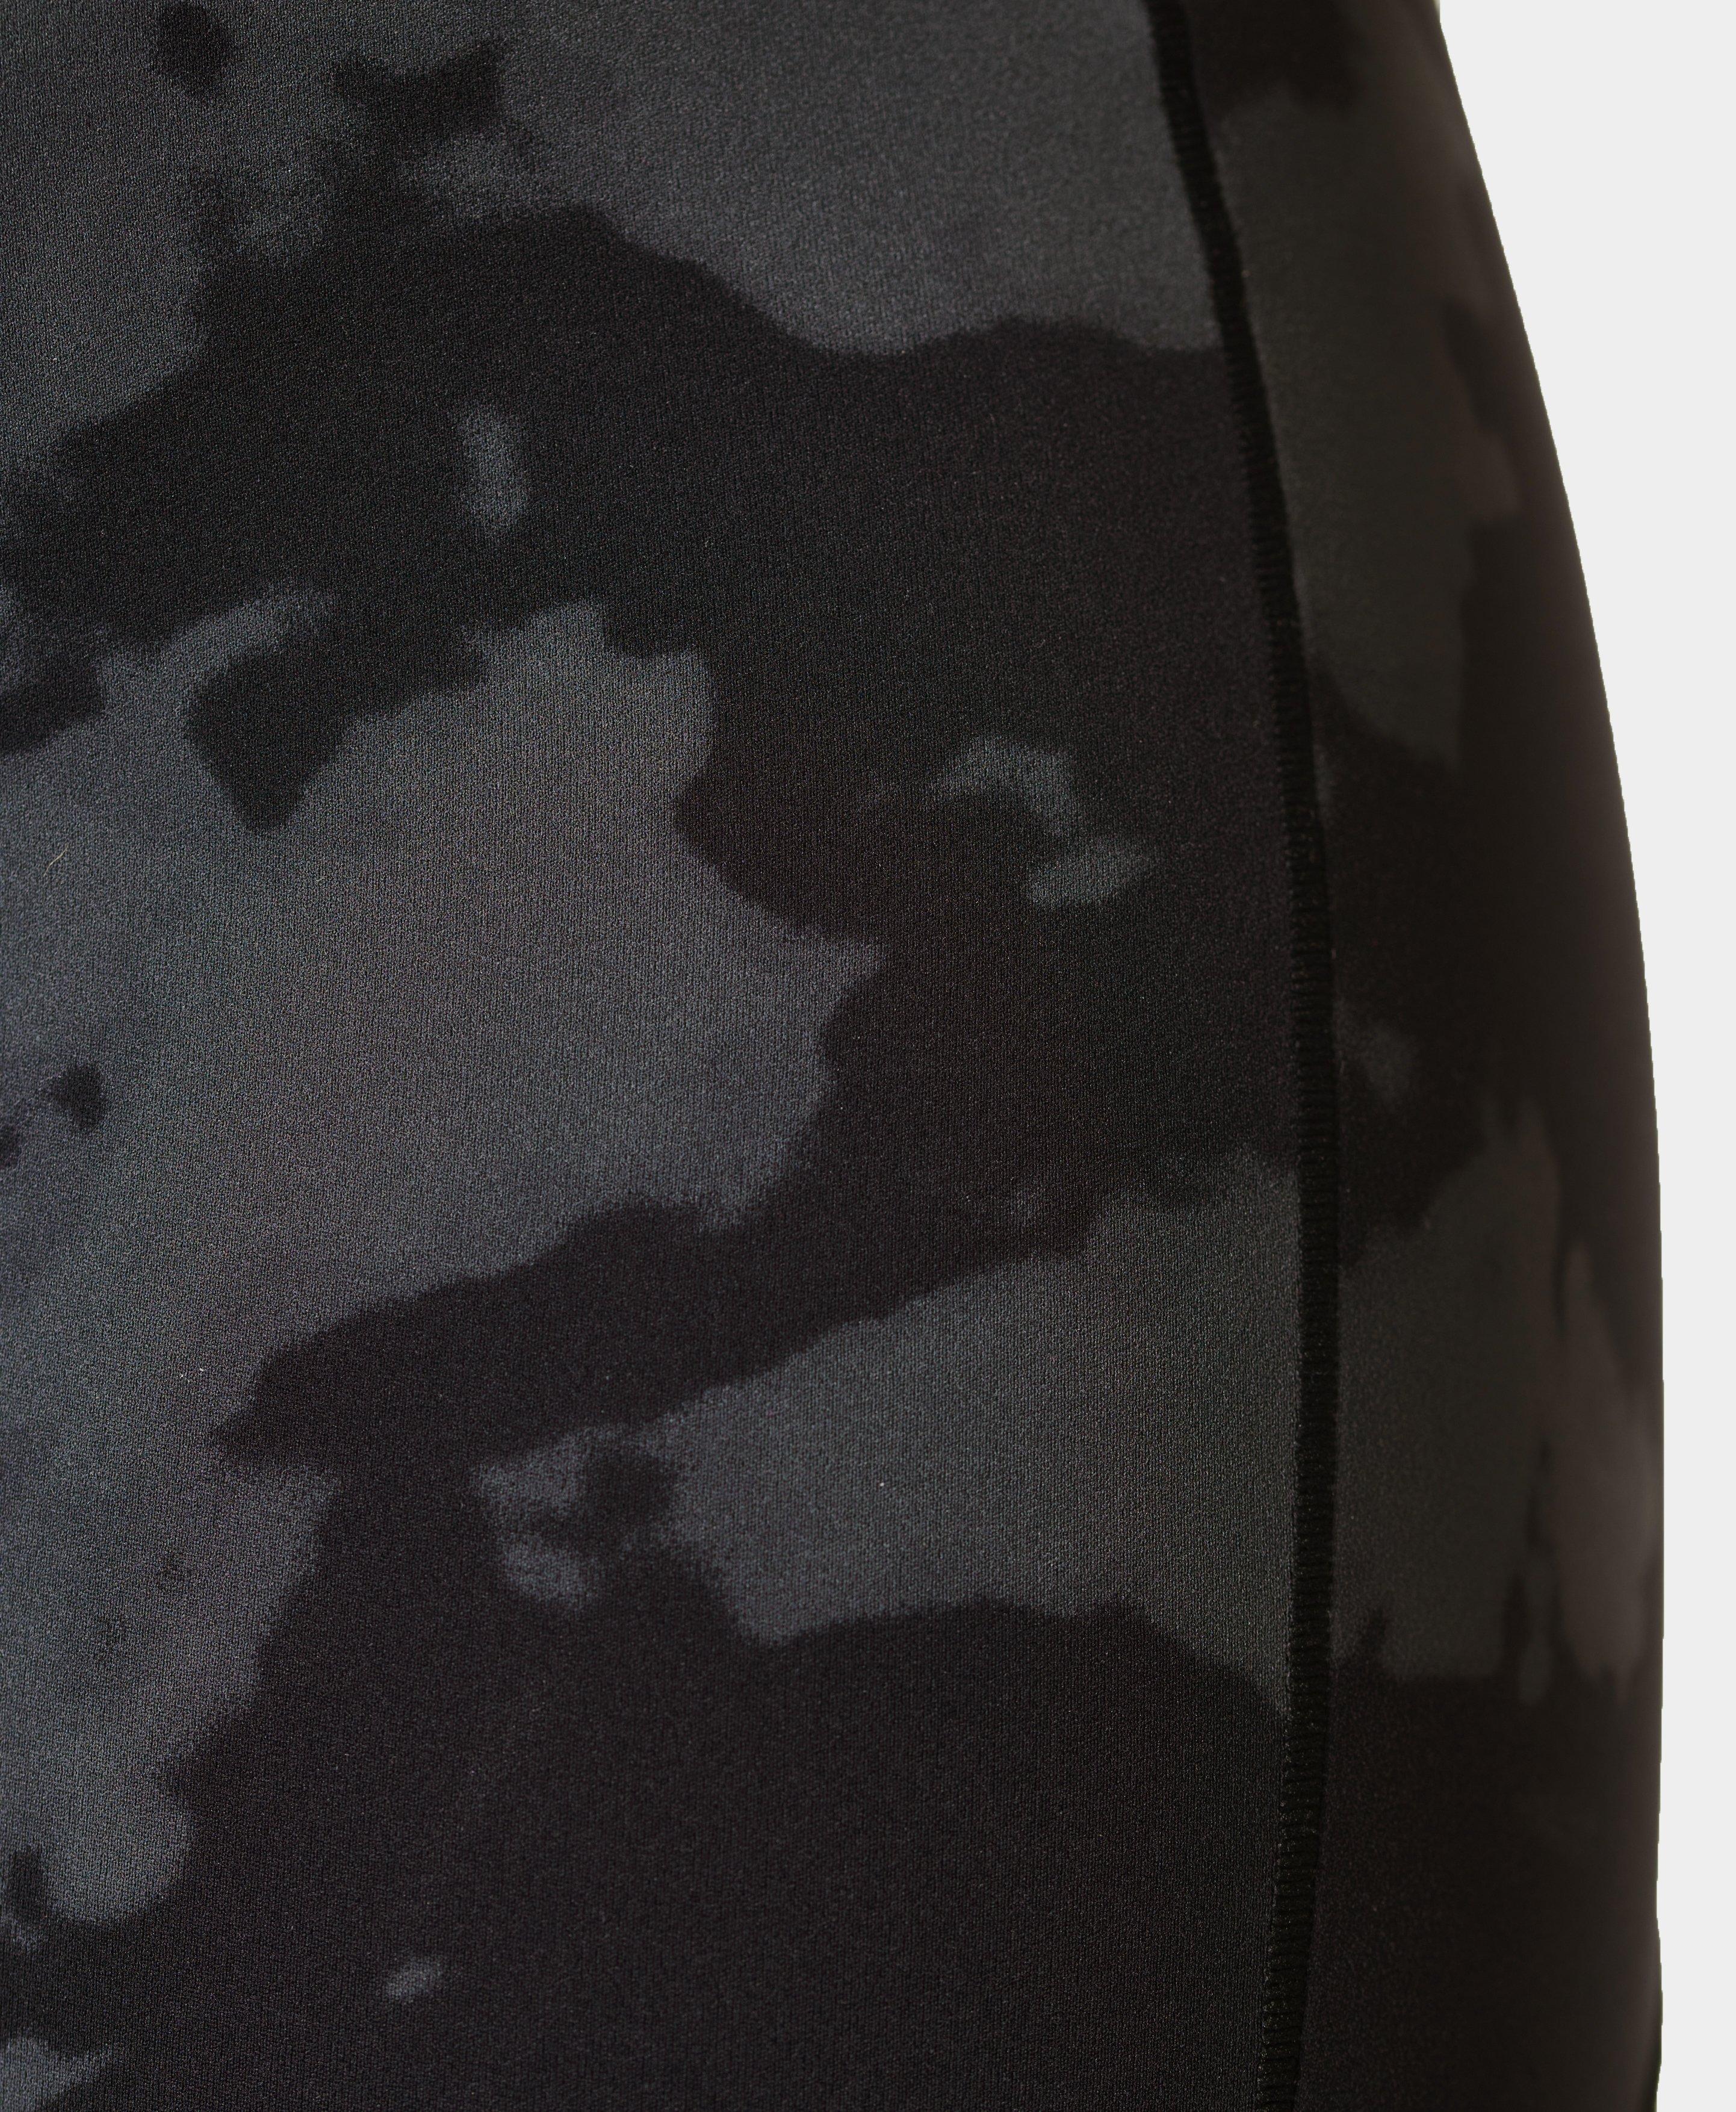 Power UltraSculpt High-Waisted Workout Leggings - Black Fade Print, Women's  Leggings